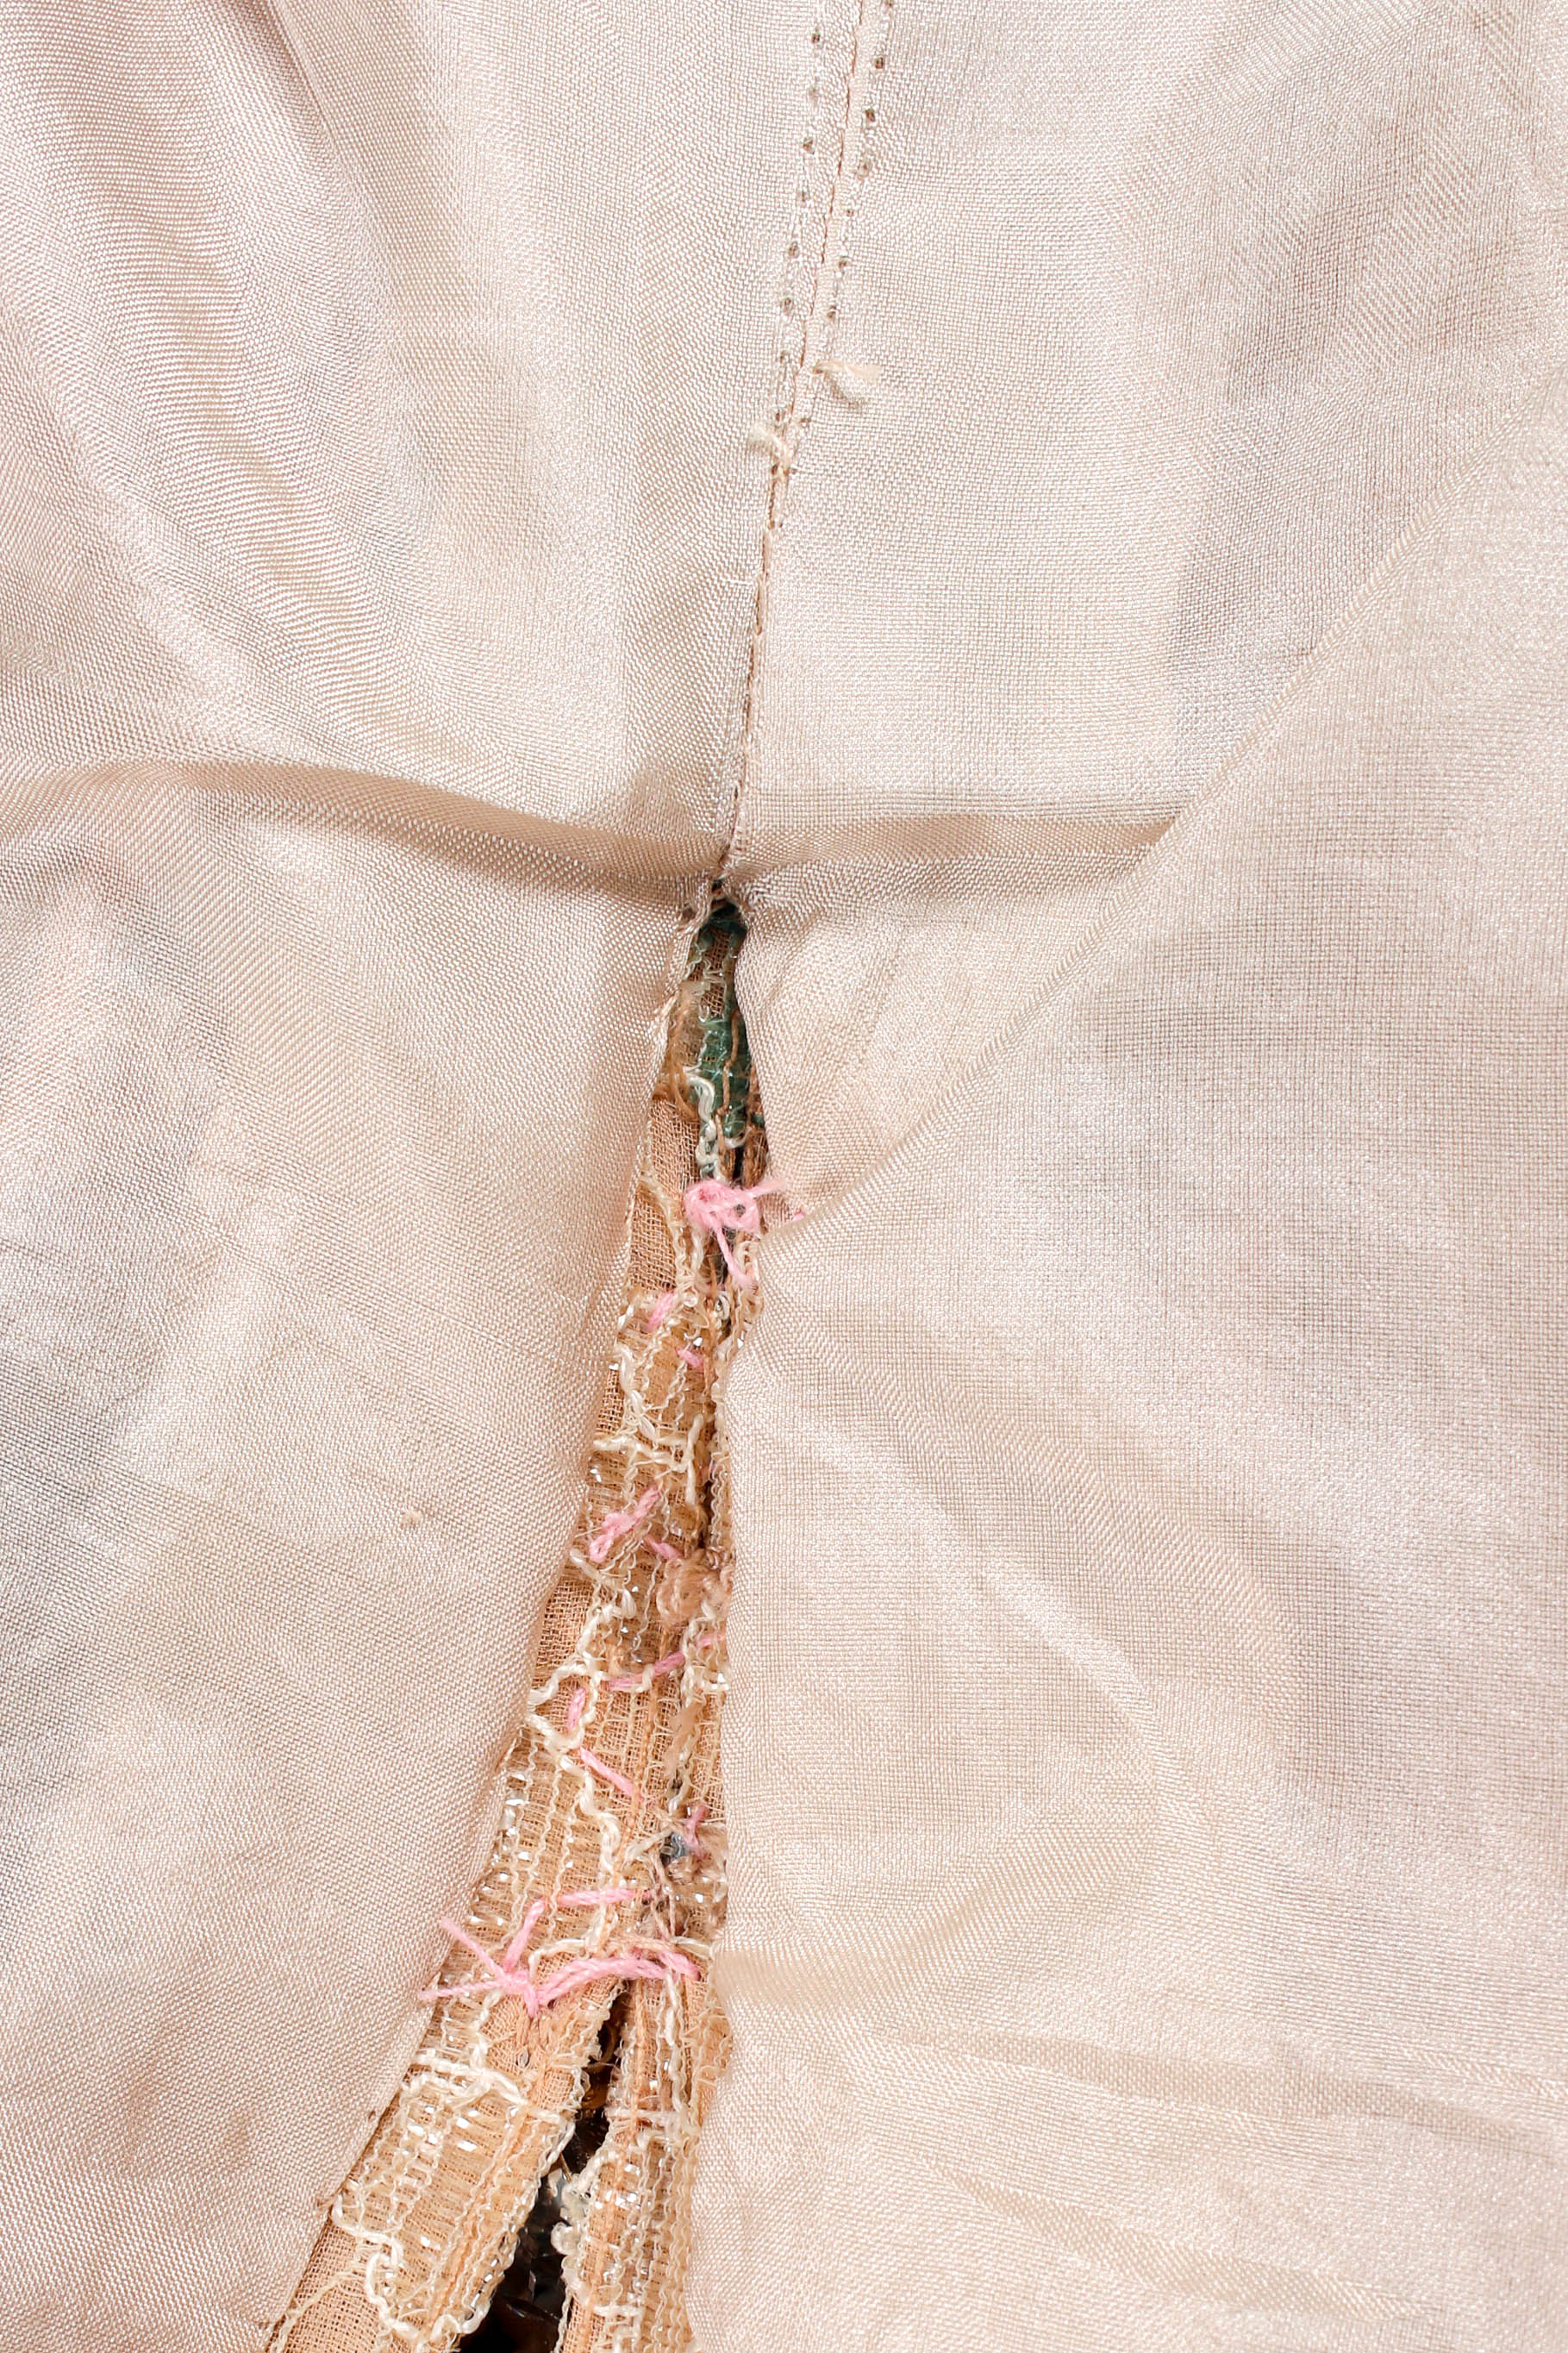 Vintage Galanos Jeweled Floral Lace Overlay Dress back slit seam detail @ Recess LA